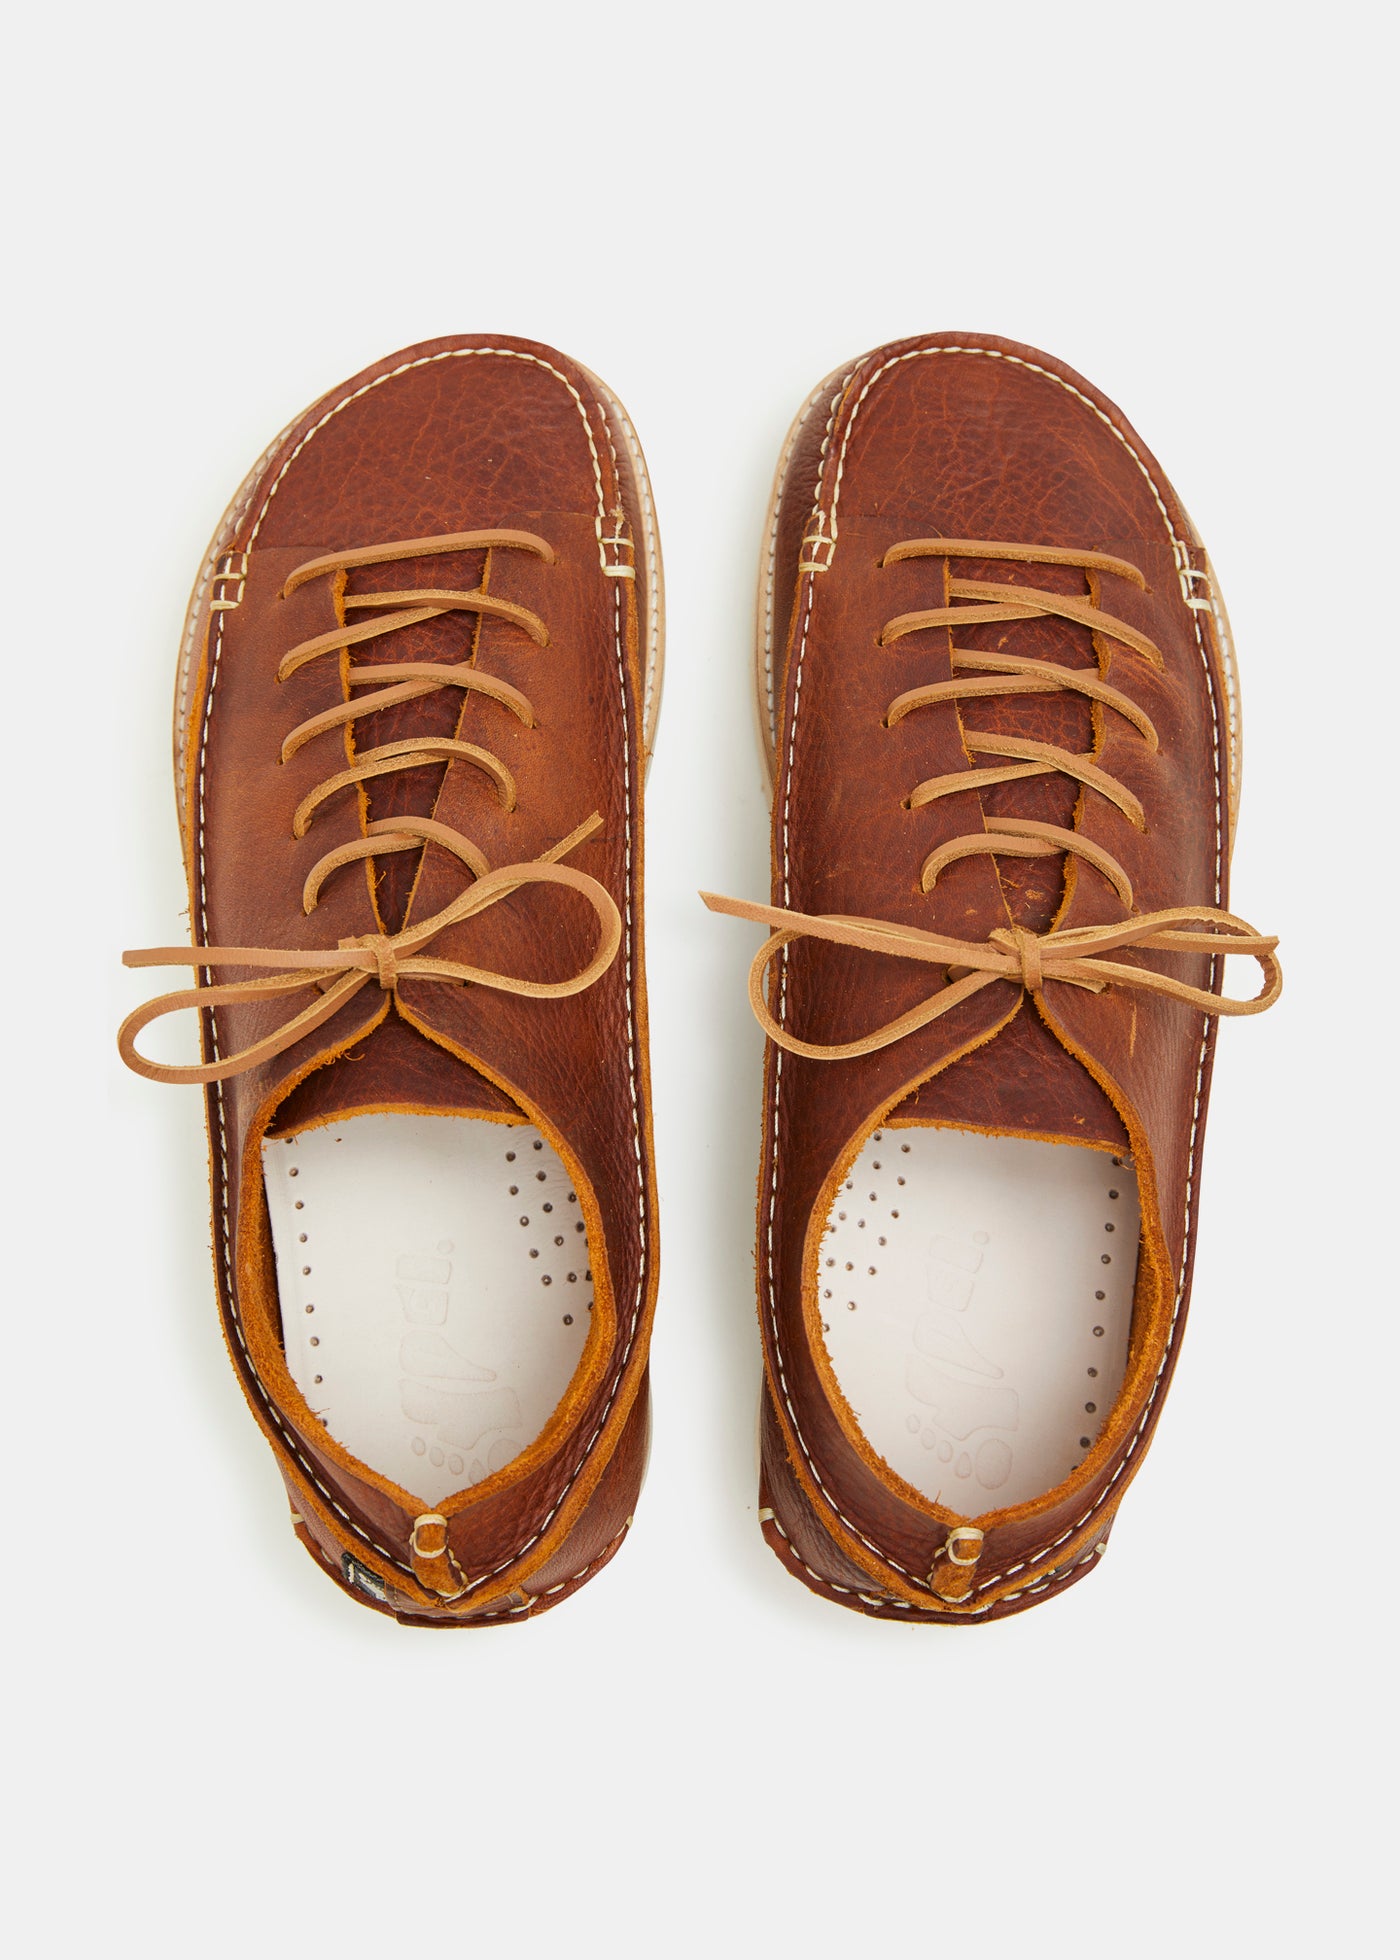 Yogi Finn Leather Lace Up shoe on EVA Outsole / Burnt Orange